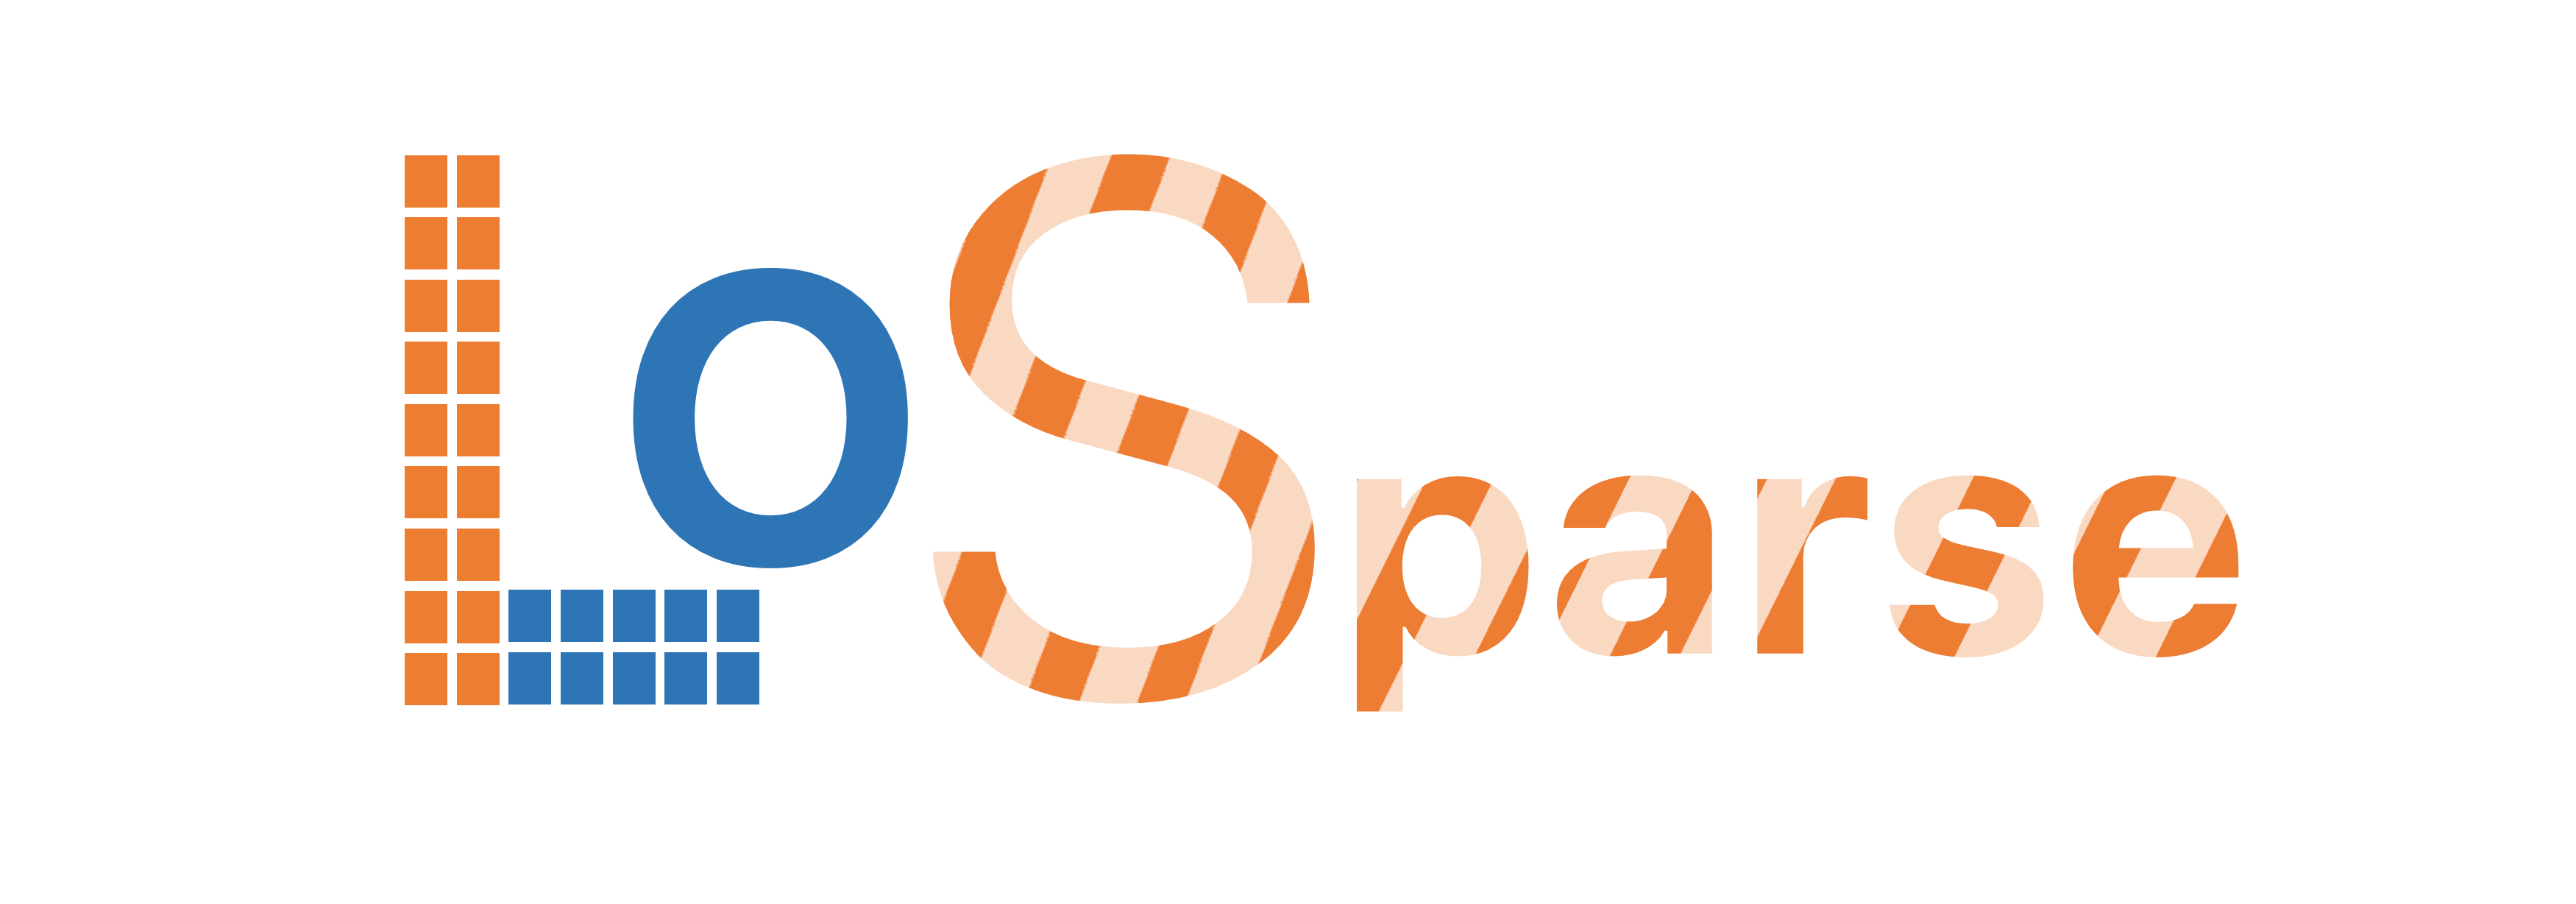 LoSparse_logo